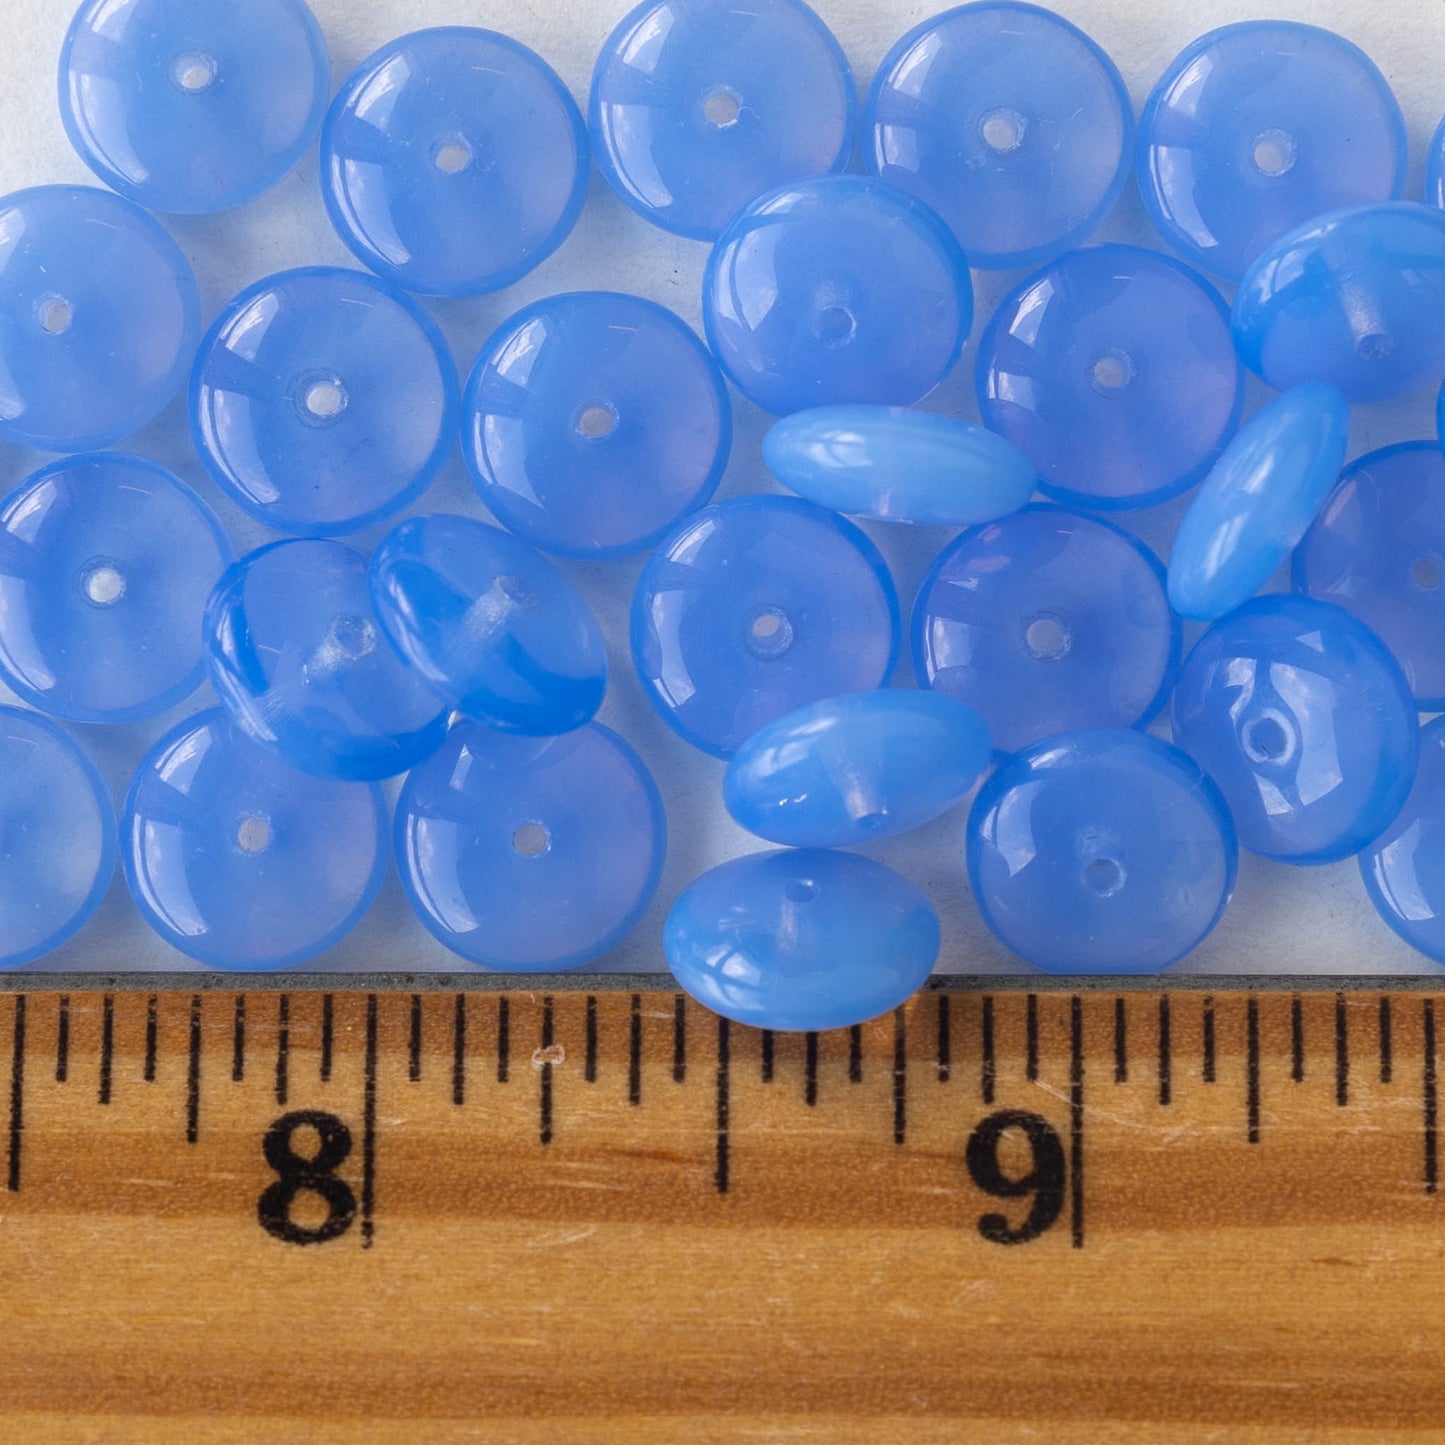 10mm Glass Rondelle Beads - Lt. Blue Opaline - 30 Beads